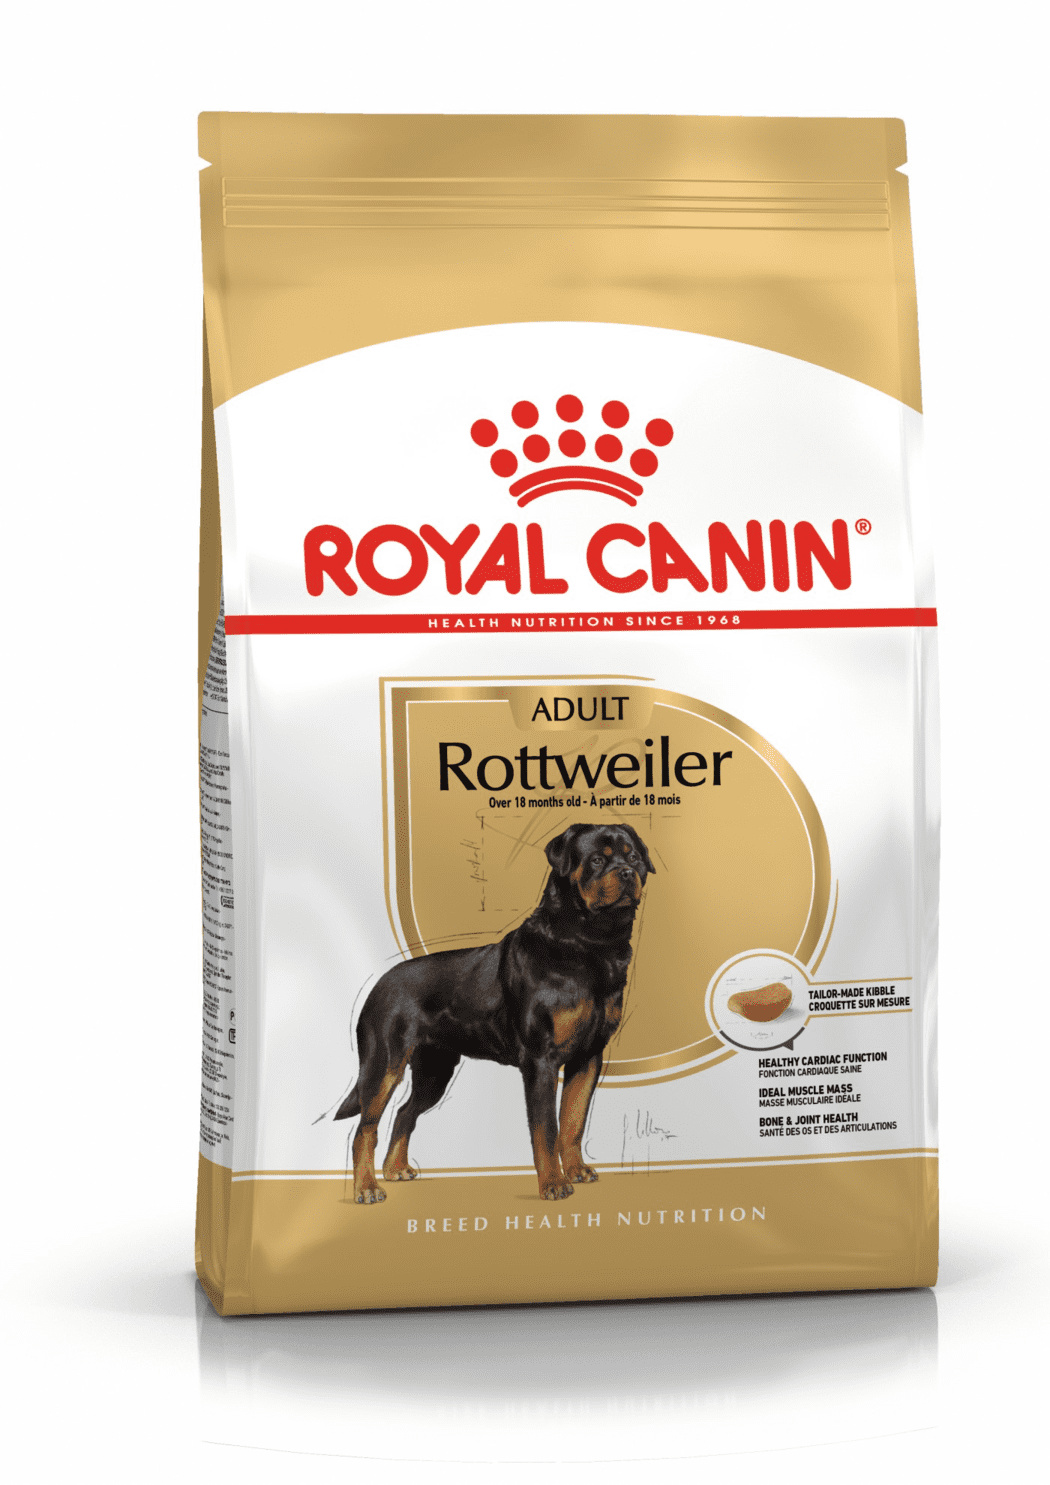 Royal Canin Корм Royal Canin для взрослого ротвейлера с 18 месяцев (12 кг) royal canin корм royal canin для взрослого голден ретривера с 15 месяцев 3 кг